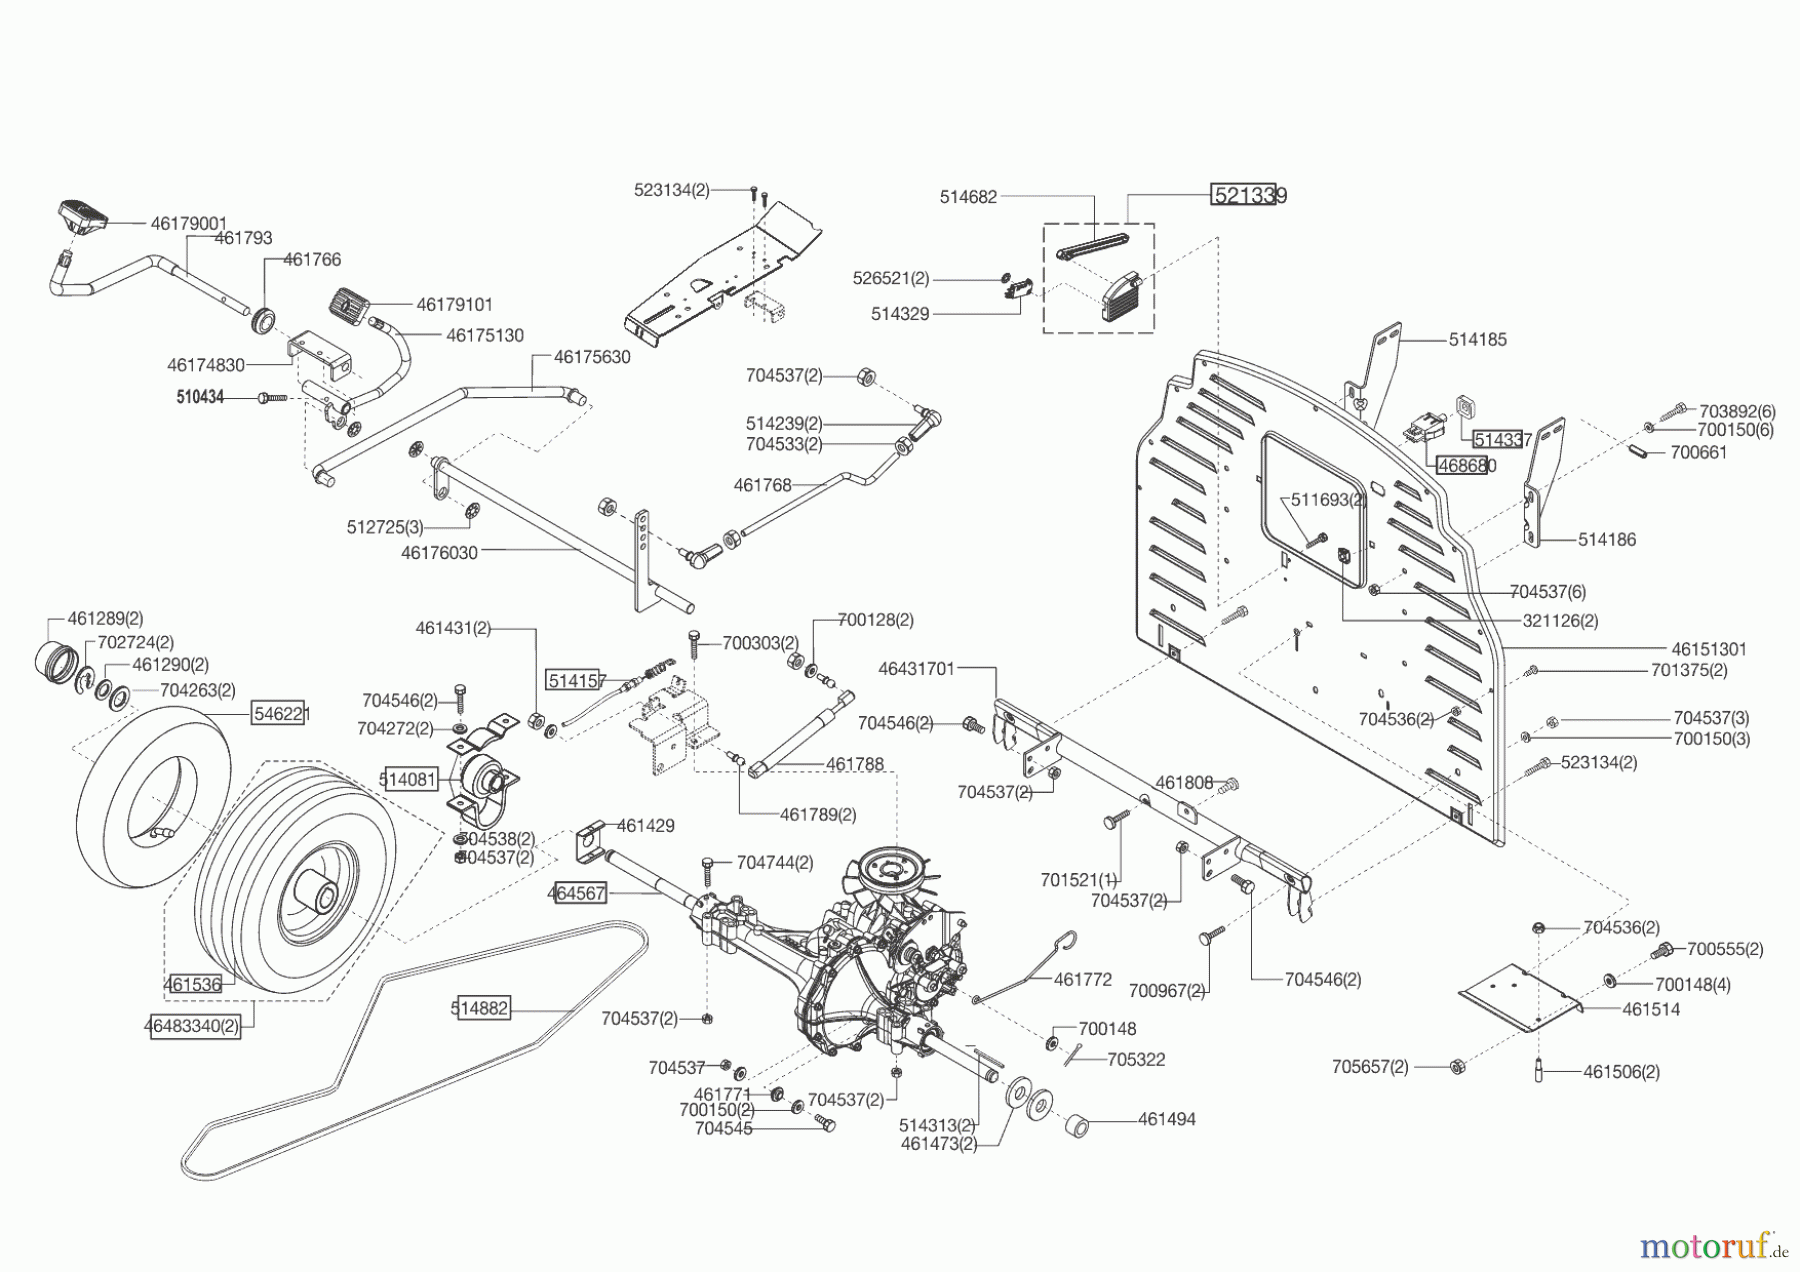  AL-KO Gartentechnik Rasentraktor Comfort T 954 HD-A  ab 03/2015 Seite 3